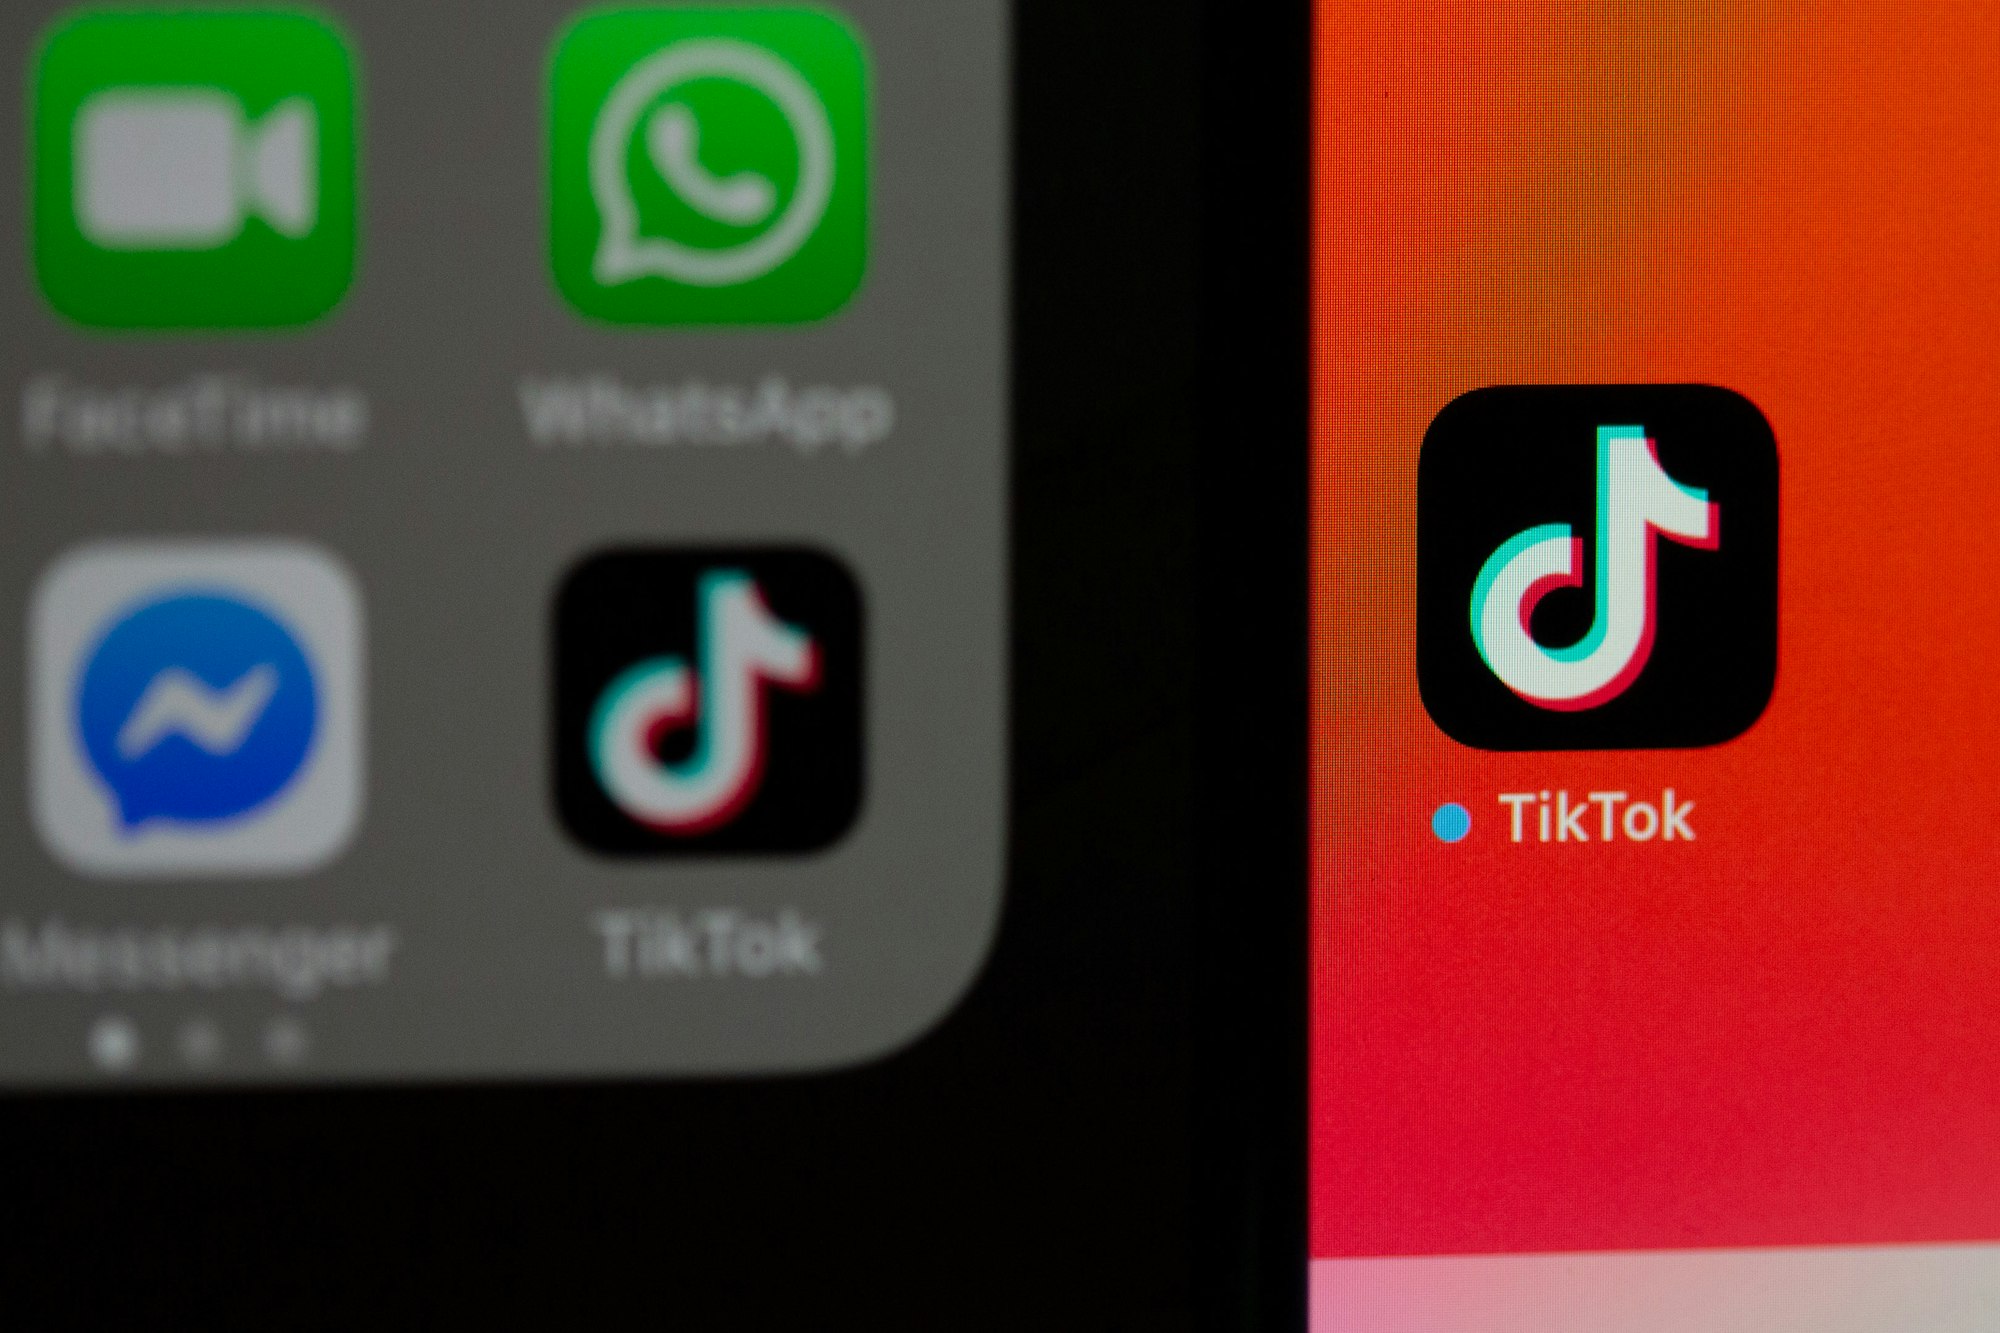 Tiktok is hiring thousands of engineers amid big tech layoffs